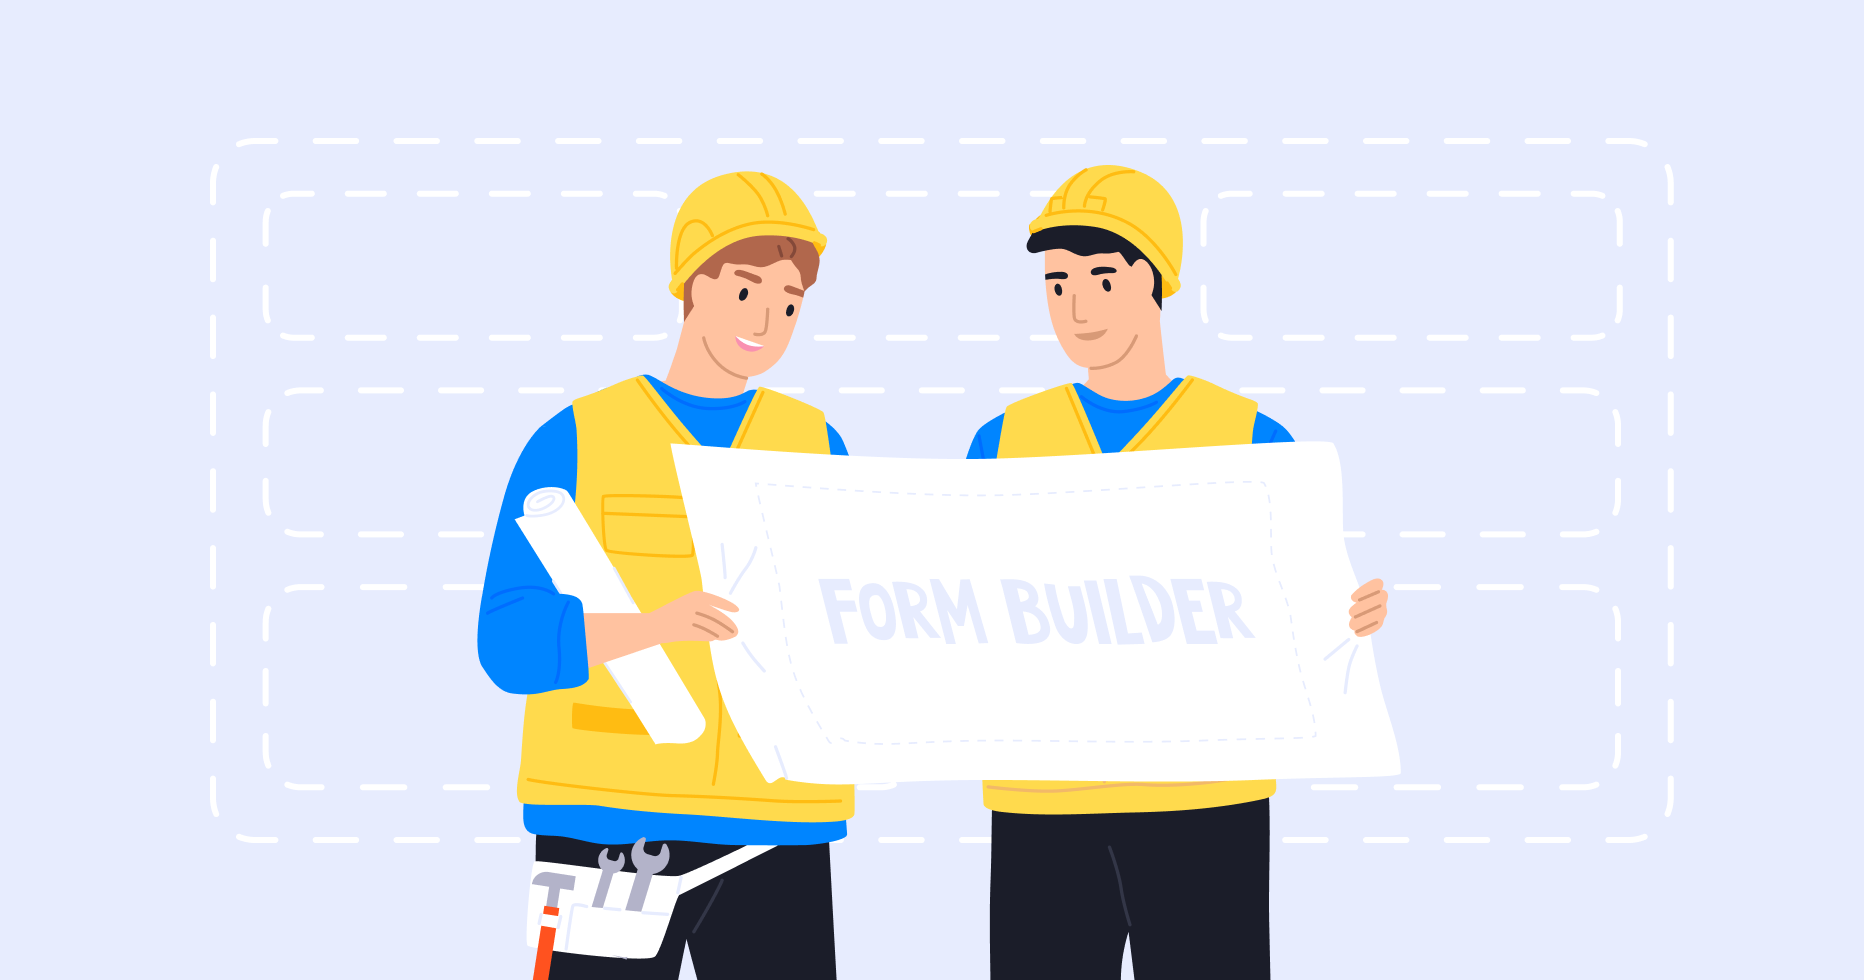 20 Best Form Builder Tools